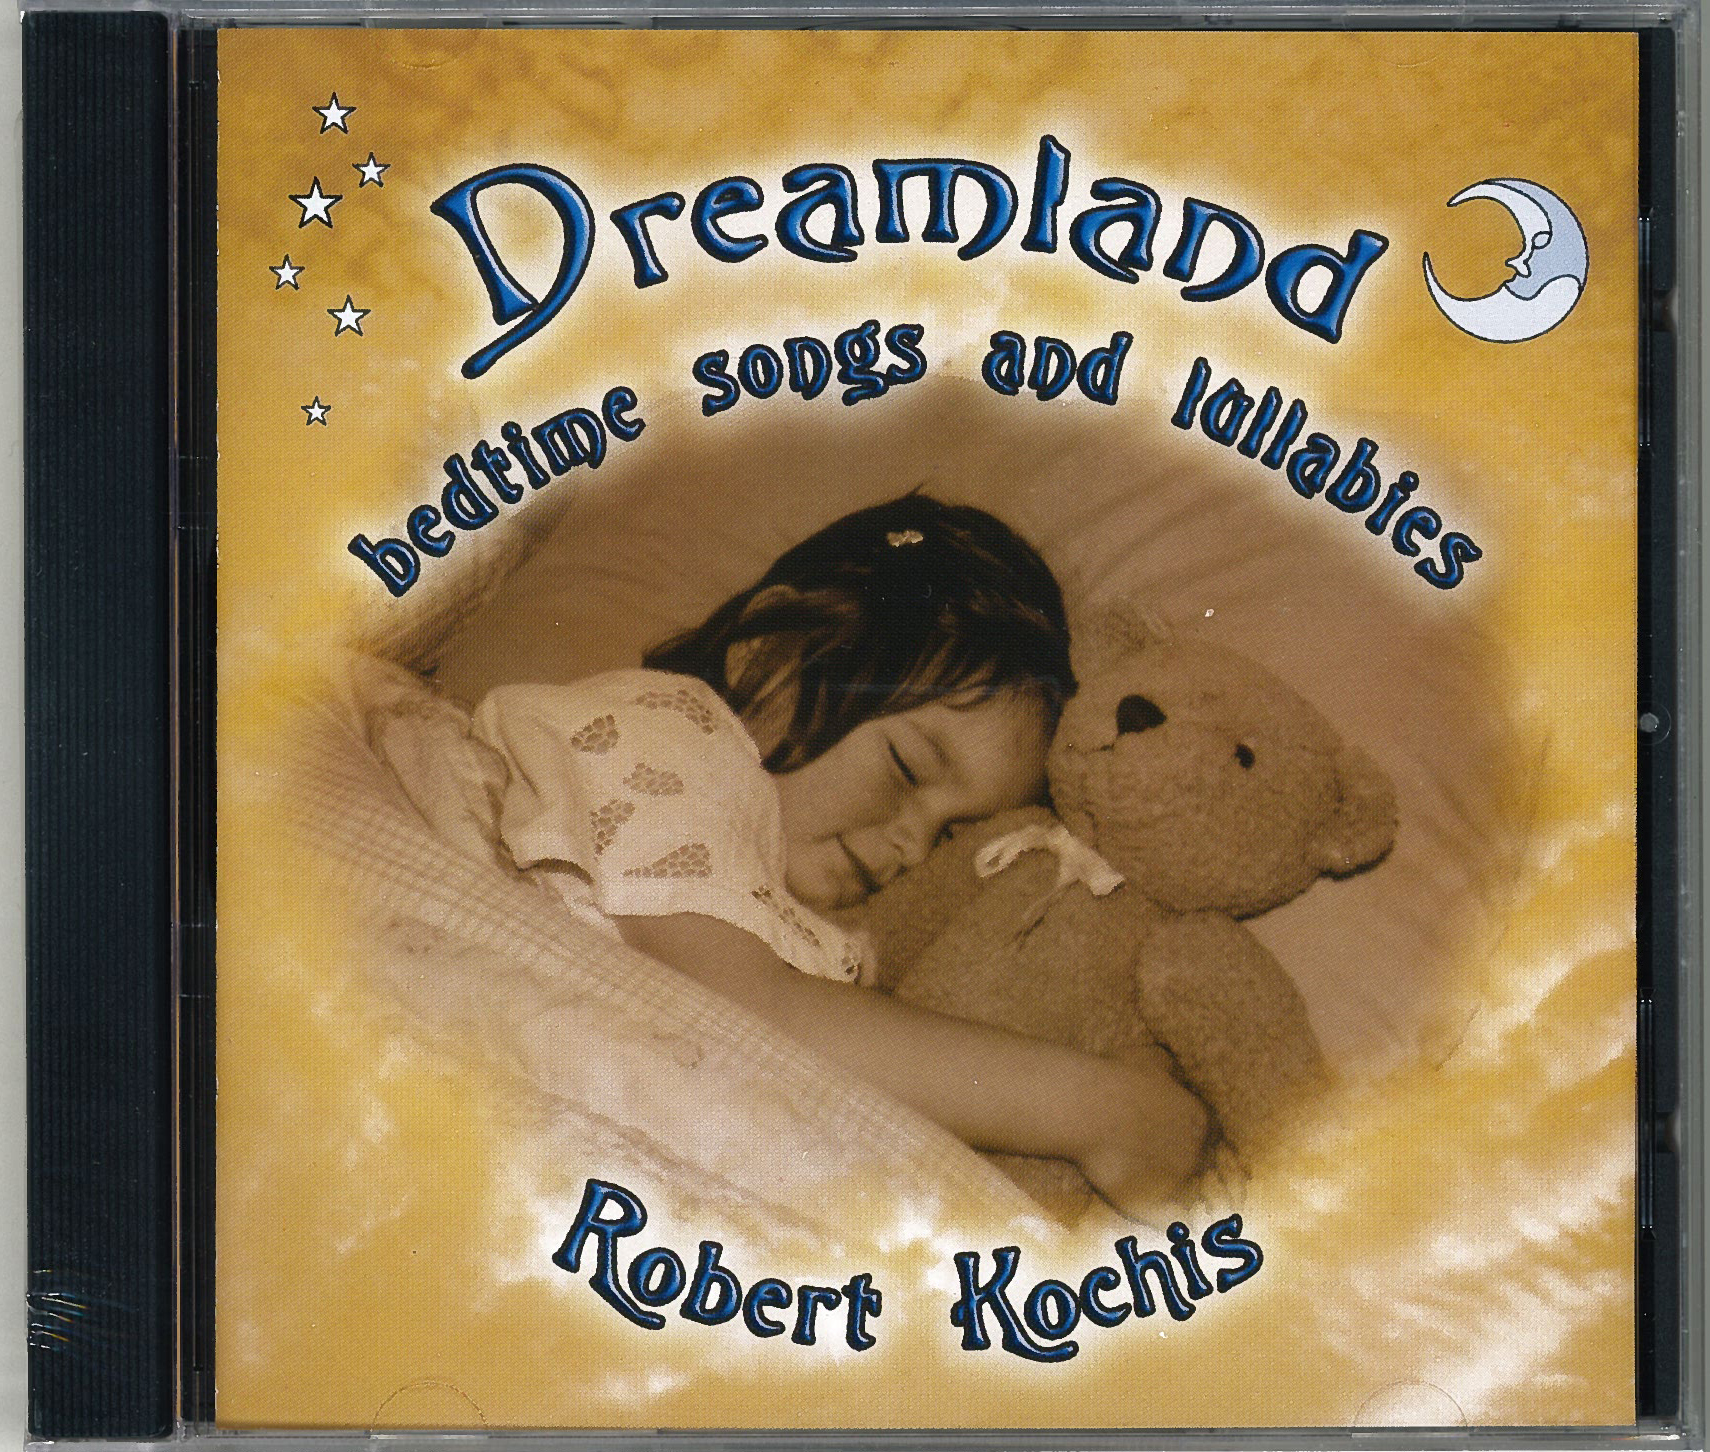 Dreamland by Robert Kochis 88-5911011032